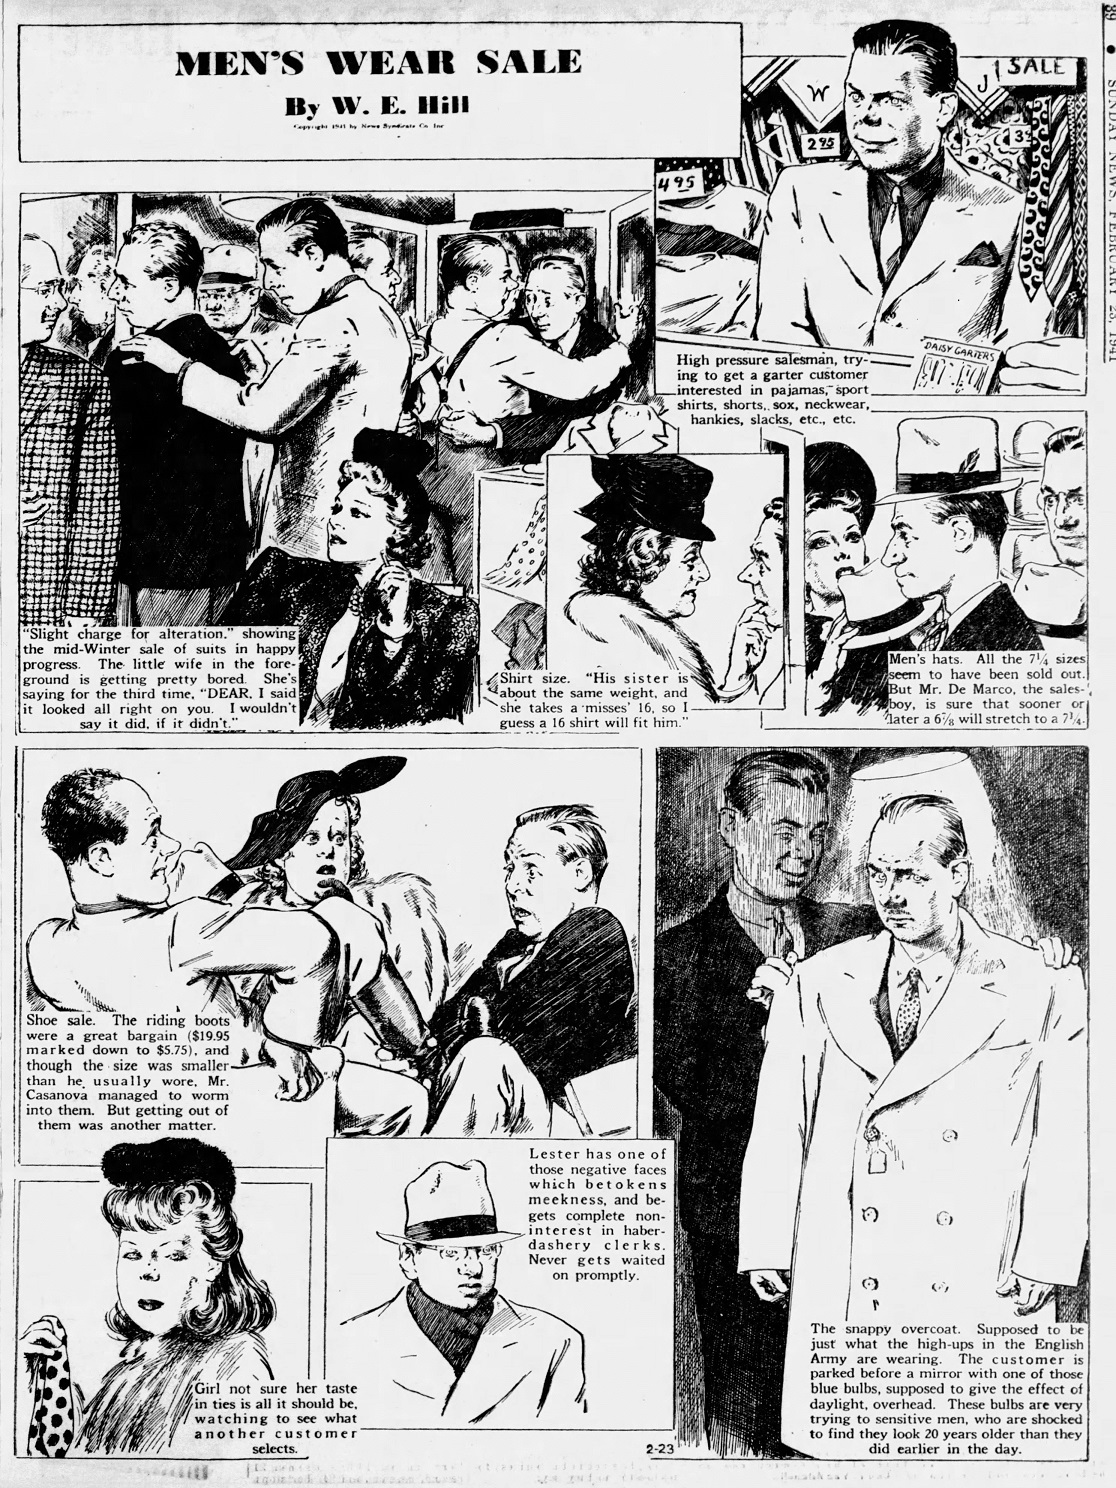 Daily_News_Sun__Feb_23__1941_(2).jpg